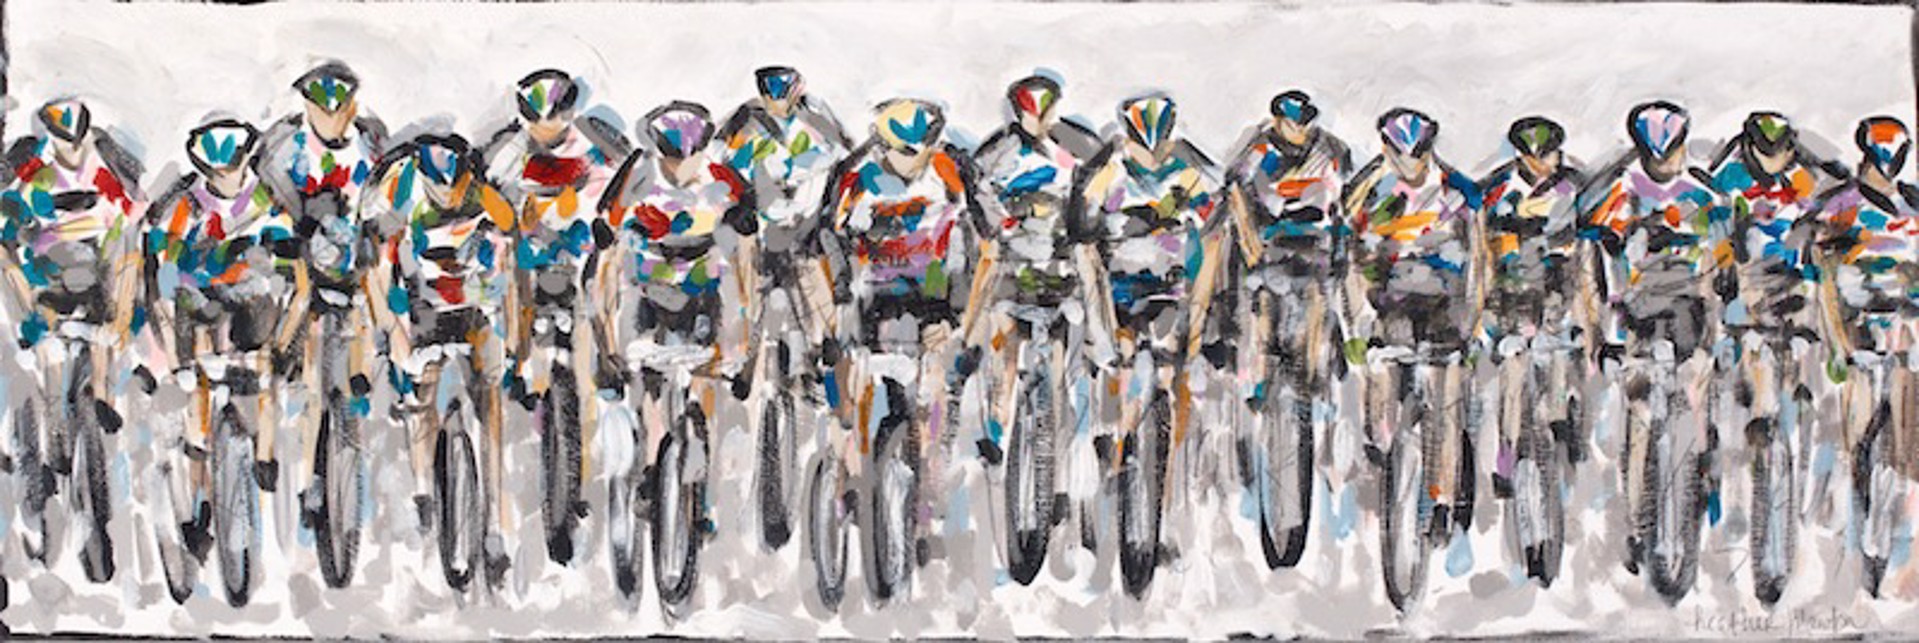 Cyclist Race Starting Line by Heather Blanton